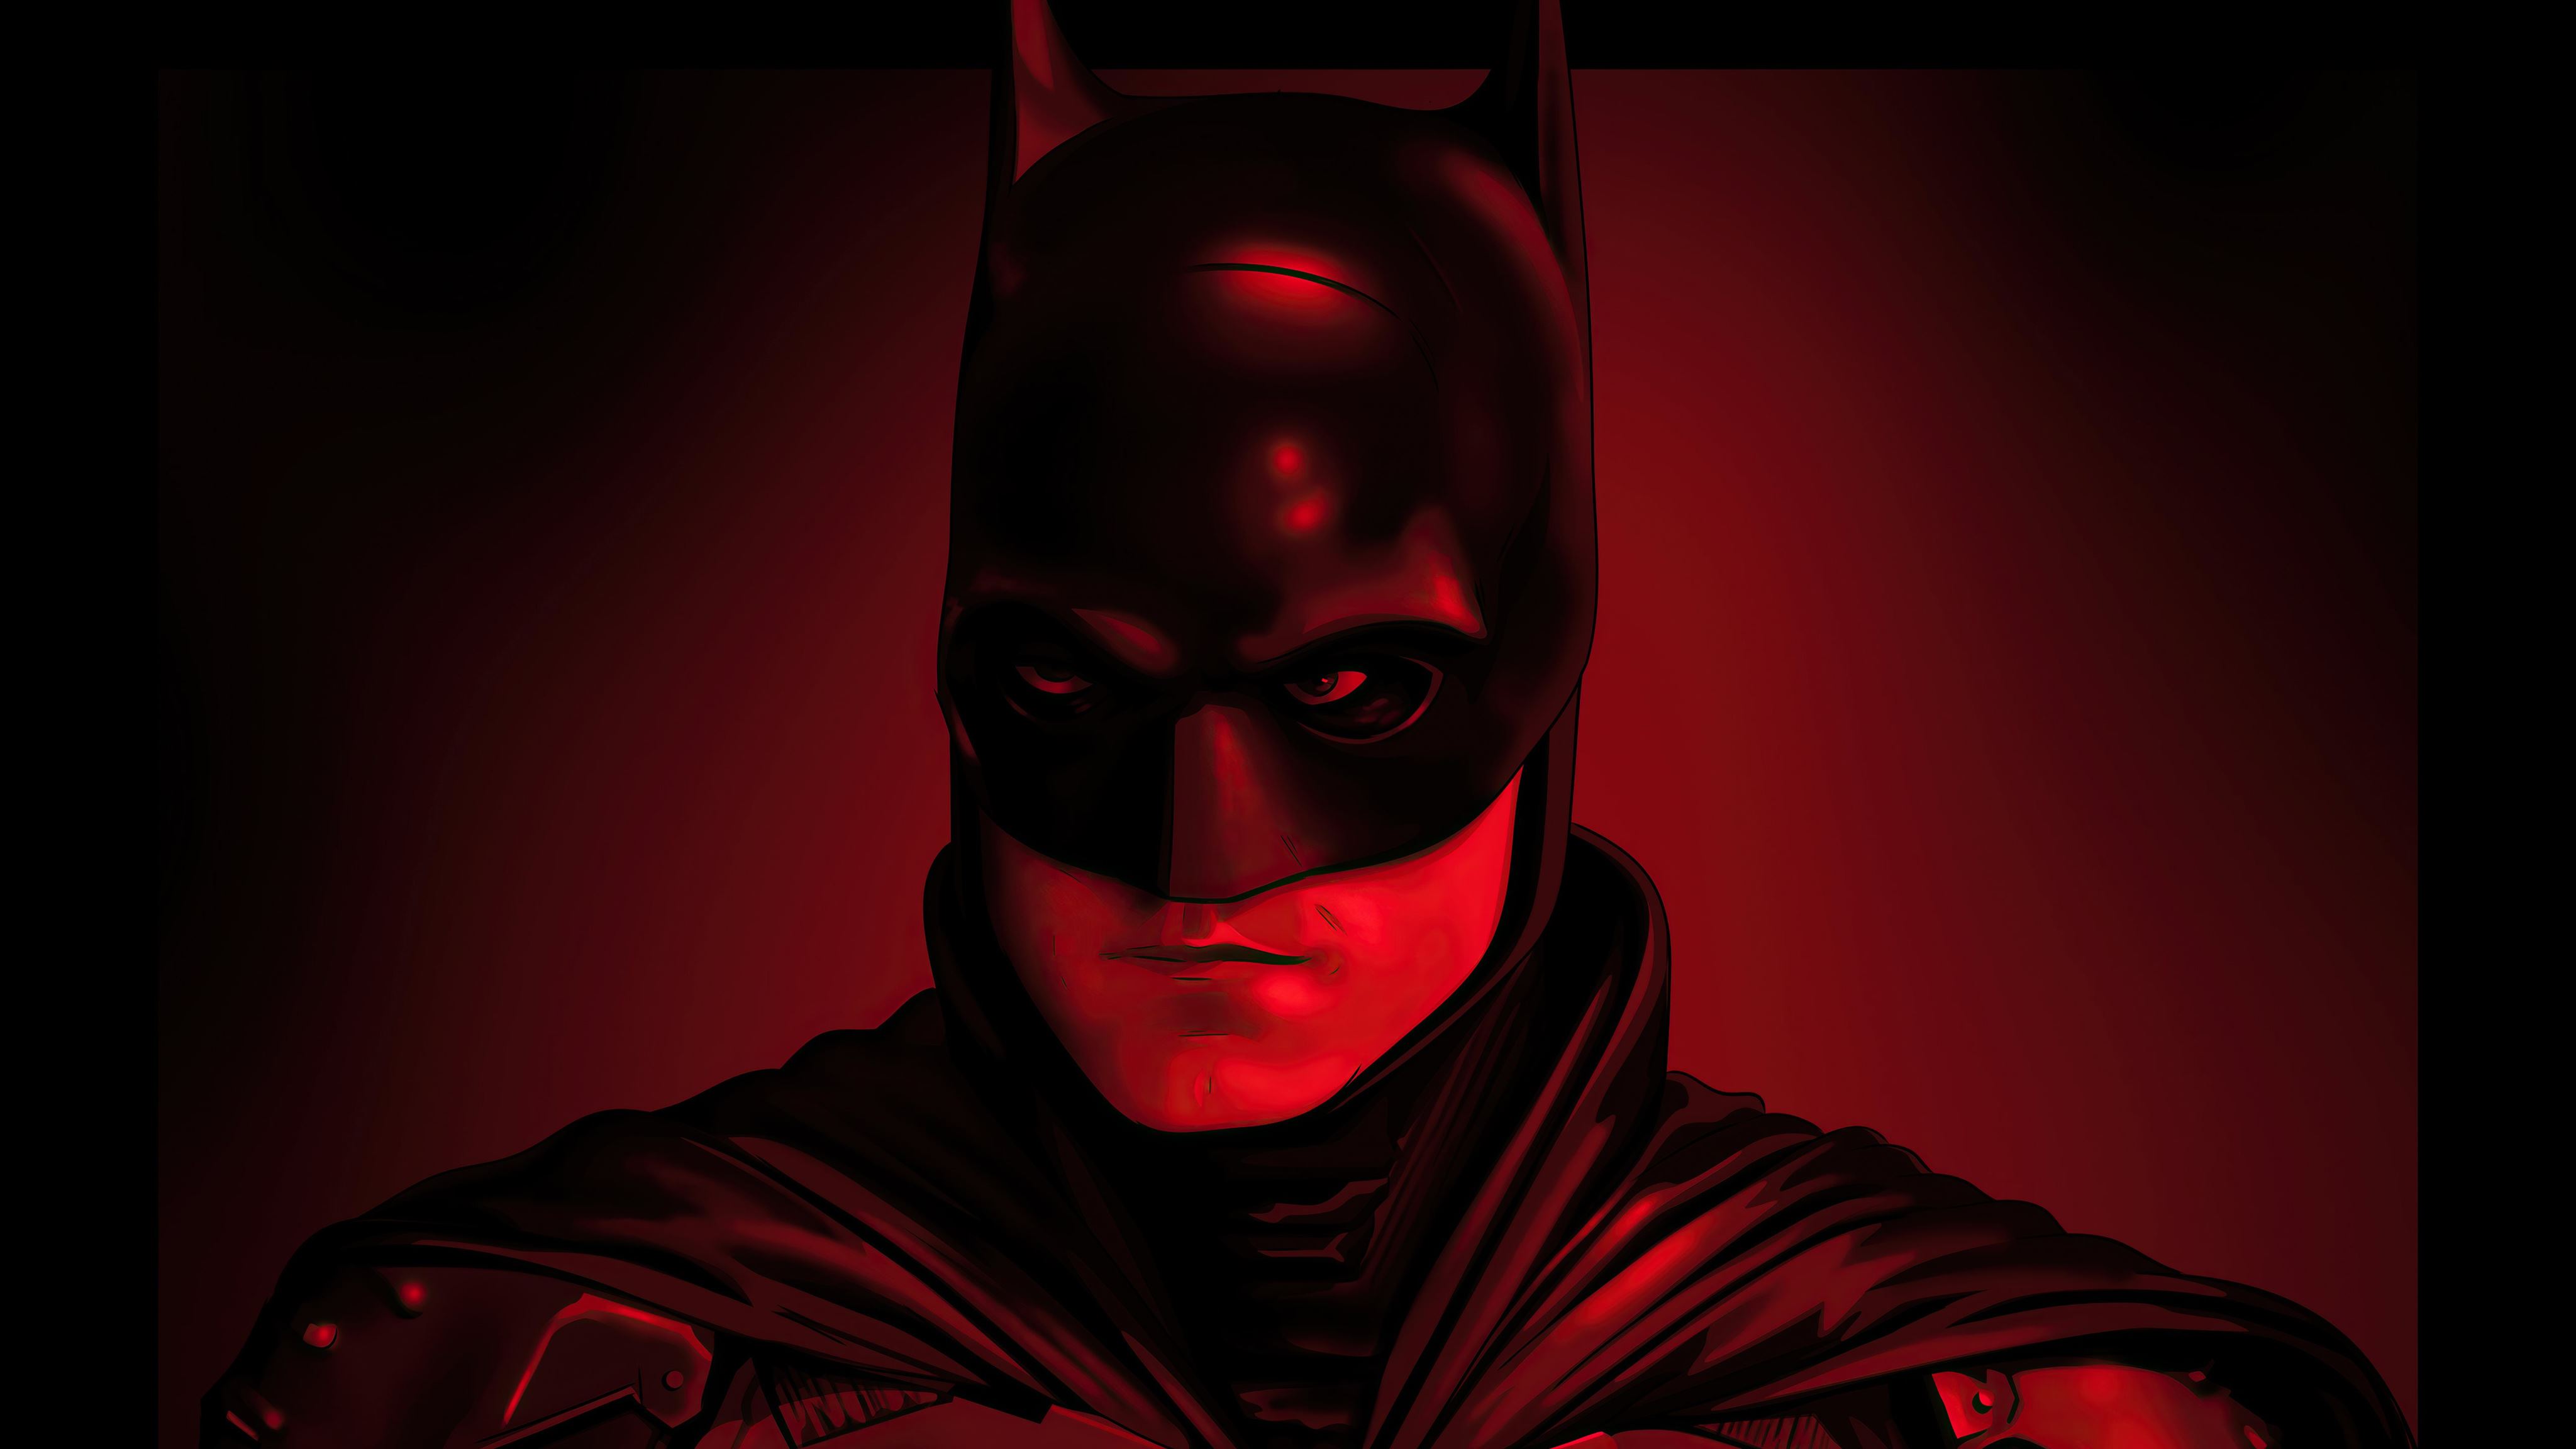 Download 4k wallpapers of Batman Logo 10k, 10k wallpapers, 4k-wallpapers,  5k wallpapers, 8k wallpa…